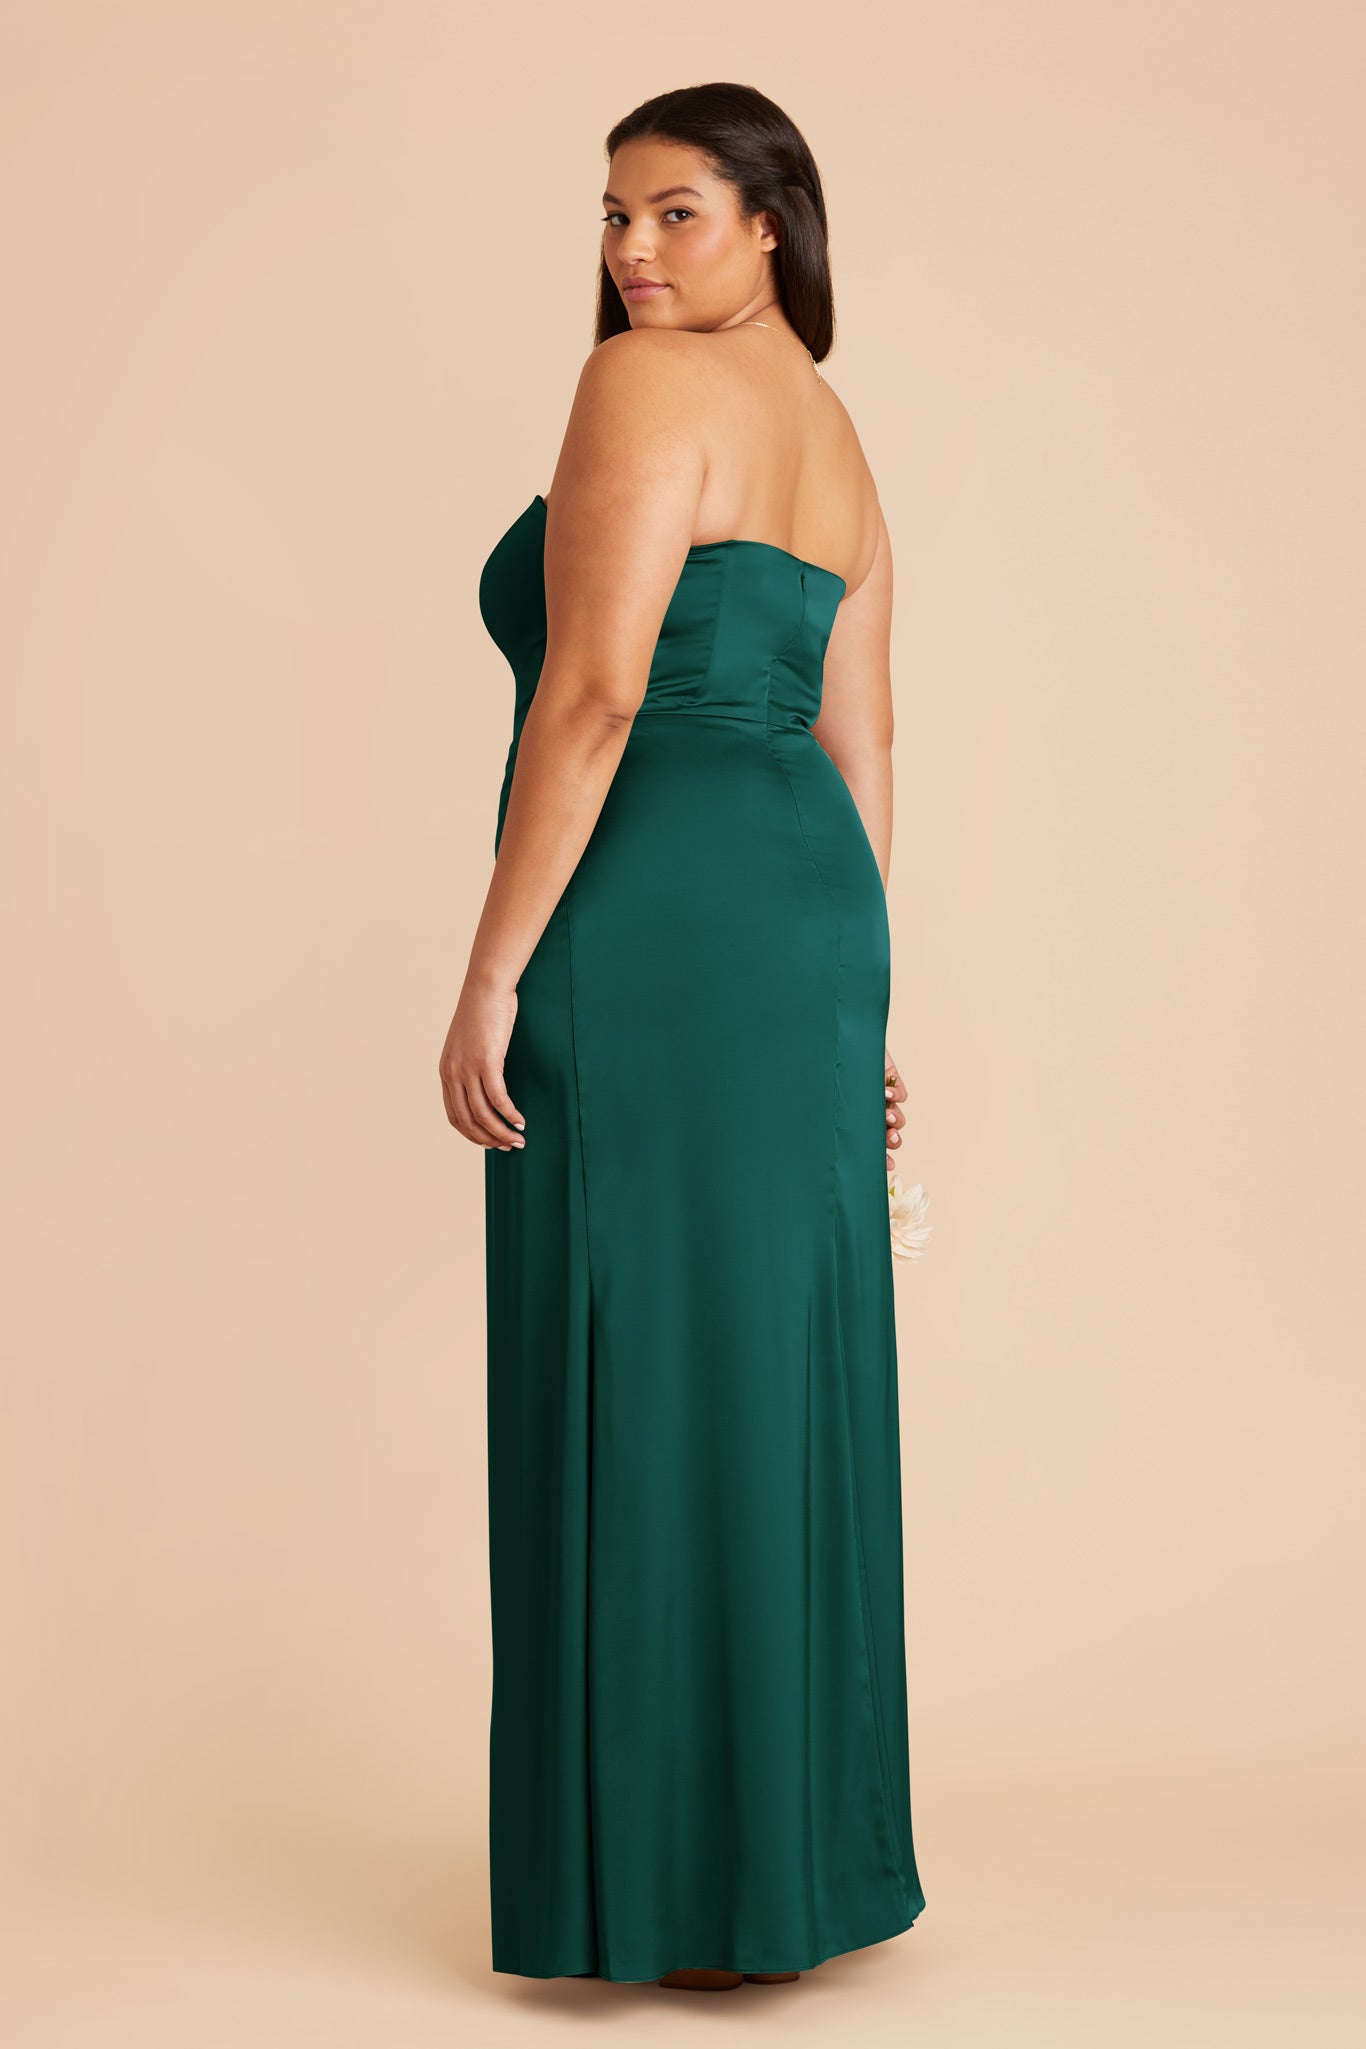 Emerald Anne Matte Satin Dress by Birdy Grey